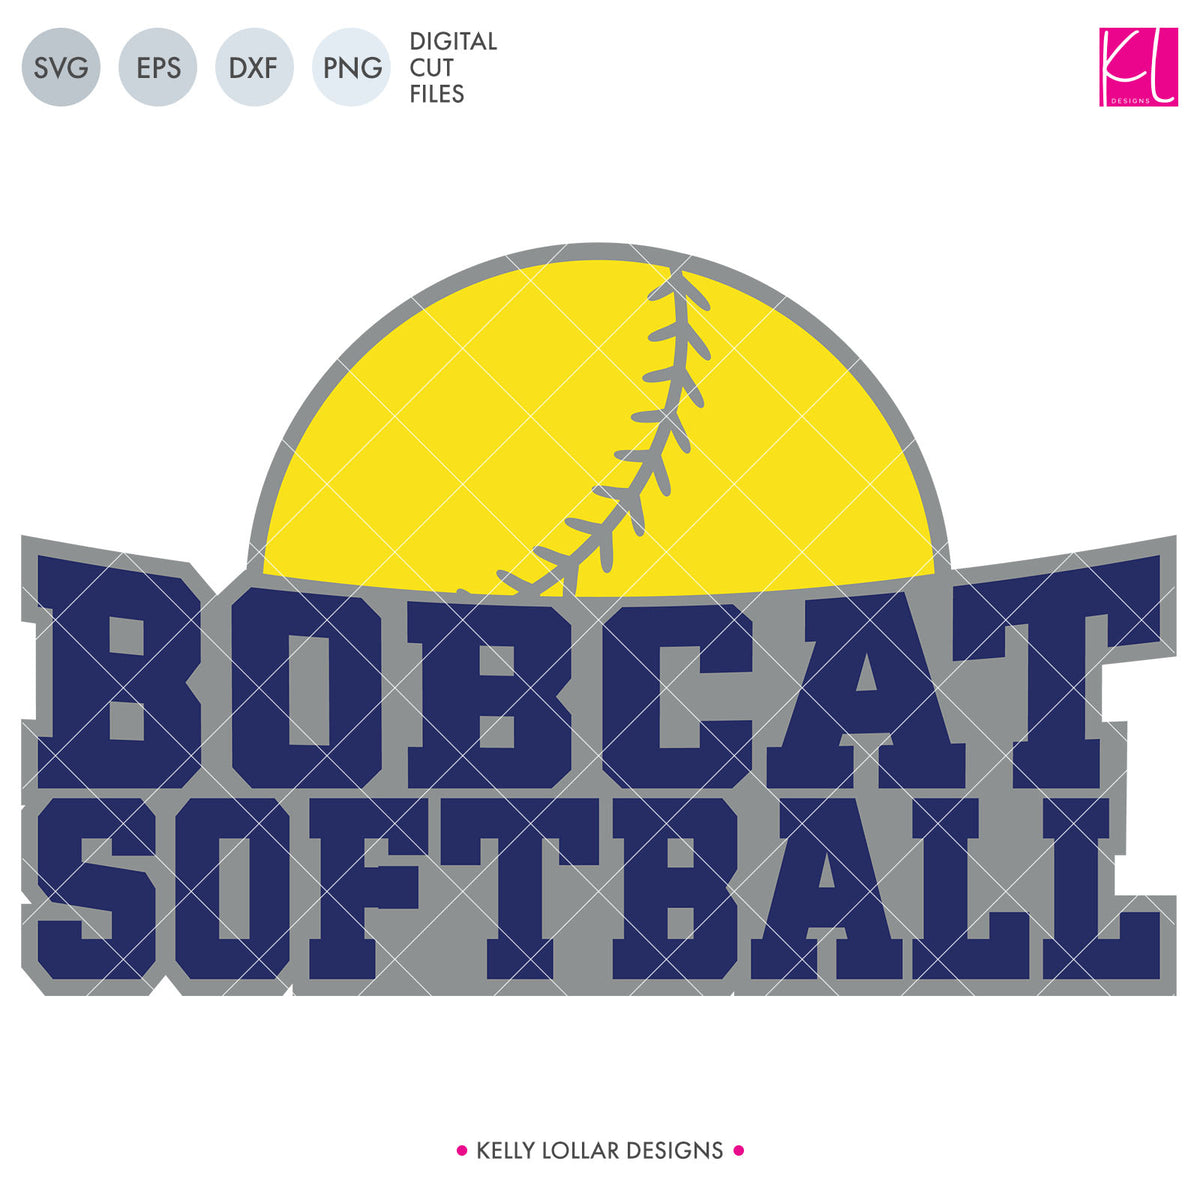 Bobcats Baseball &amp; Softball Bundle | SVG DXF EPS PNG Cut Files